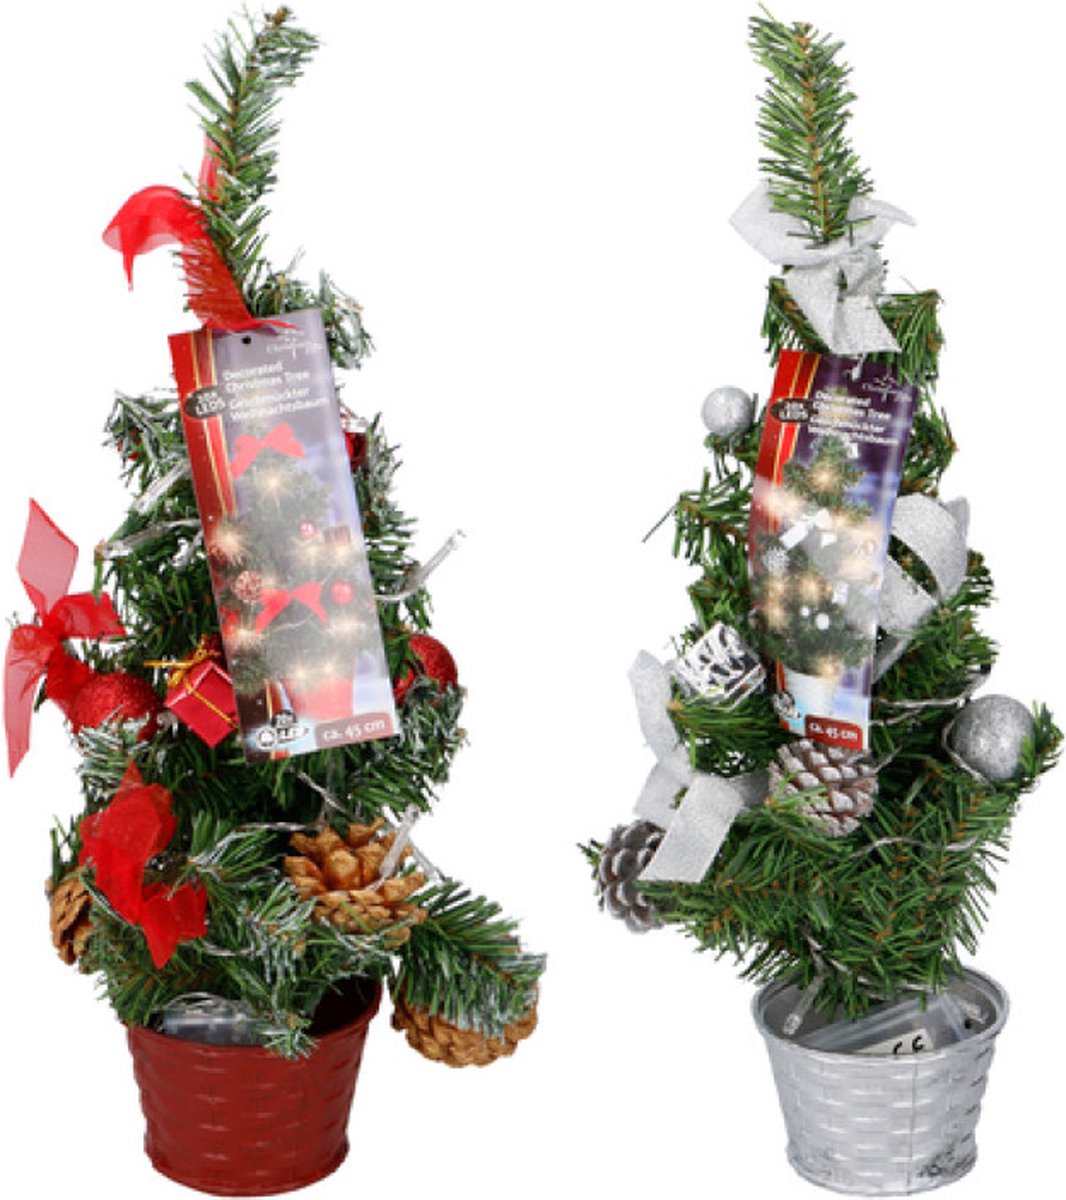 WVspecials Mini Kerstboom - Kleine Kunstkerstboom 45cm Met Verlichting en Versiering- LED Lampjes - Kerstversiering - Kerstboomverlichting - Standaard - Christmas Tree